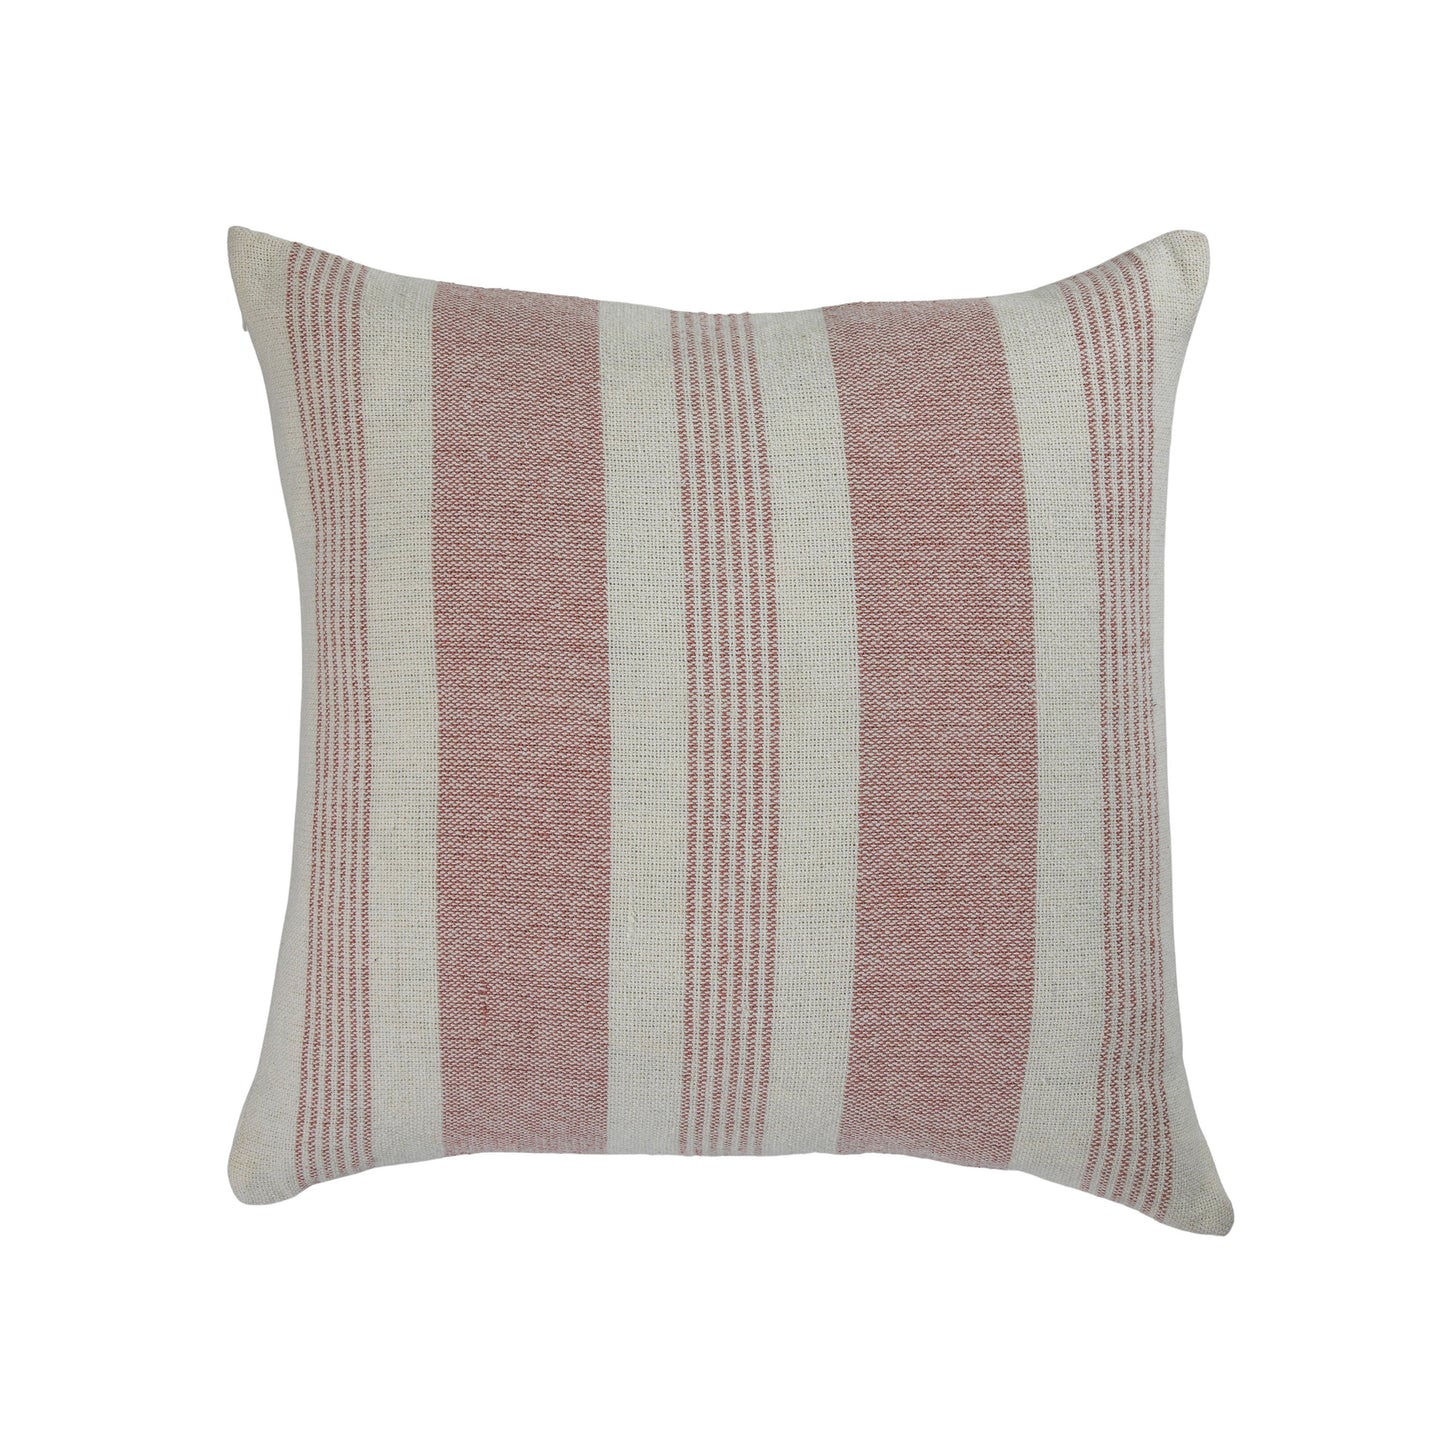 A Simply Organic Str Cushion Blush 550x550mm by Kikiathome.co.uk for interior decor.